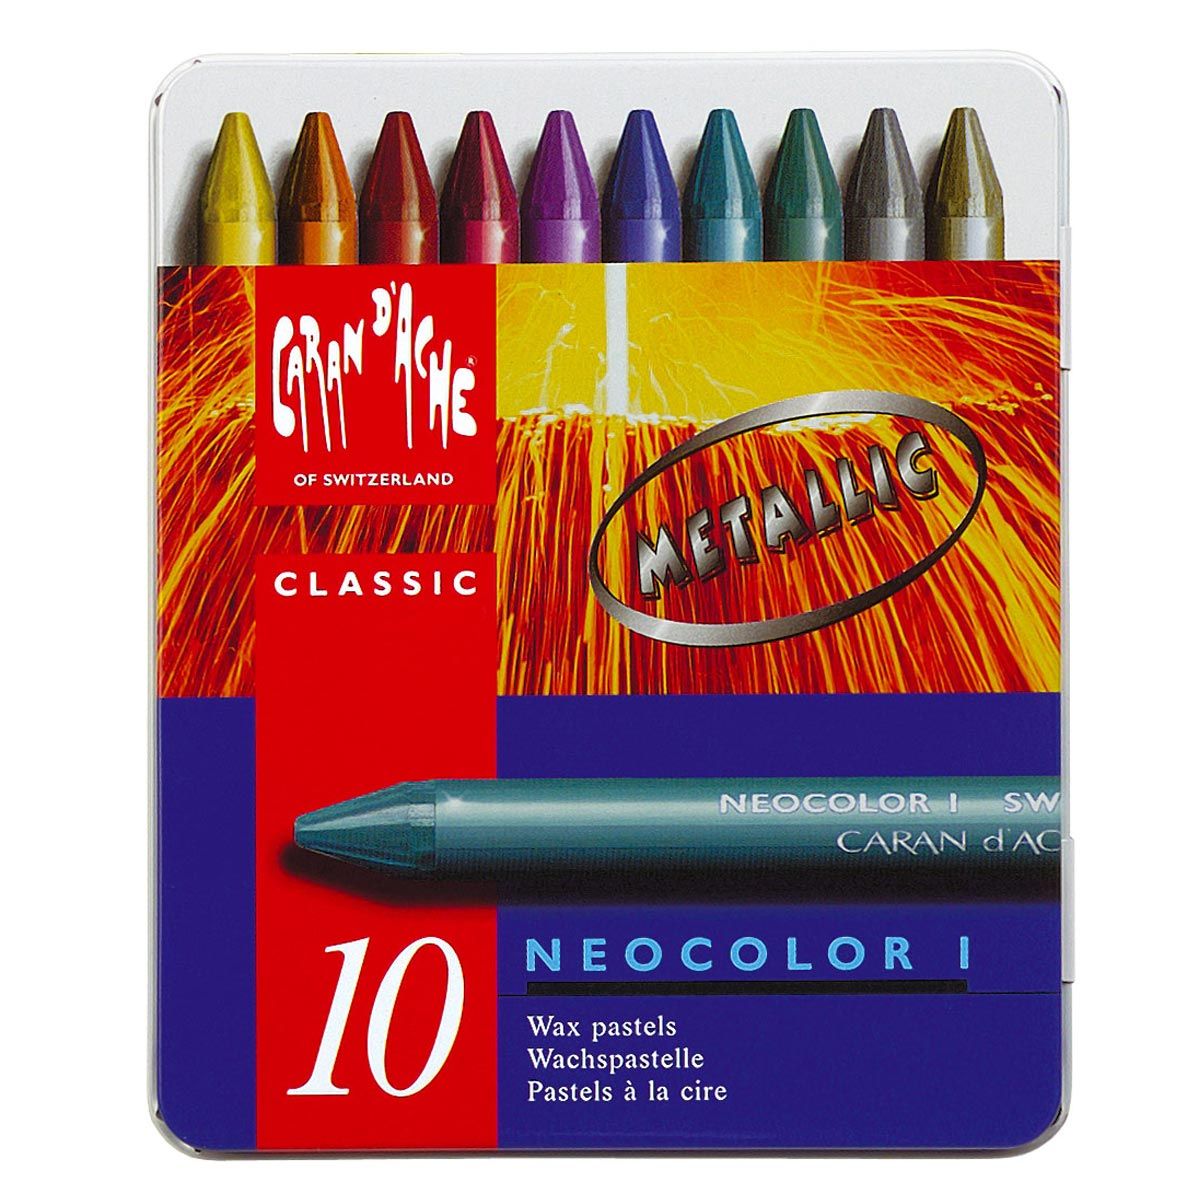 Caran d'Ache Neocolor I Metallic Artist Crayons Set of 10